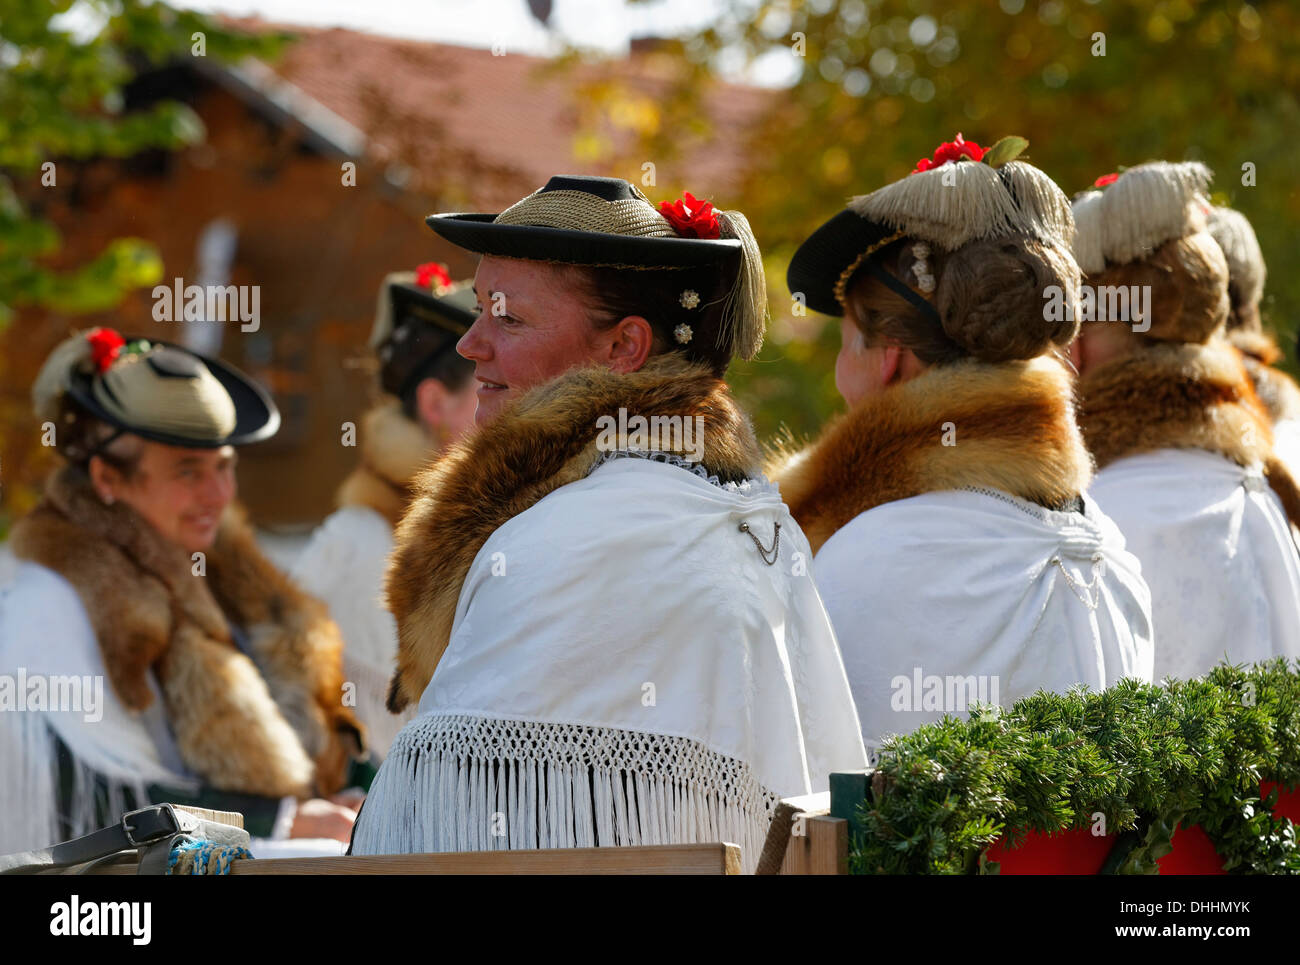 Leonhardiritt procession, women wearing traditional dress with fox stoles, Wildsteig, Pfaffenwinkel region, Upper Bavaria Stock Photo